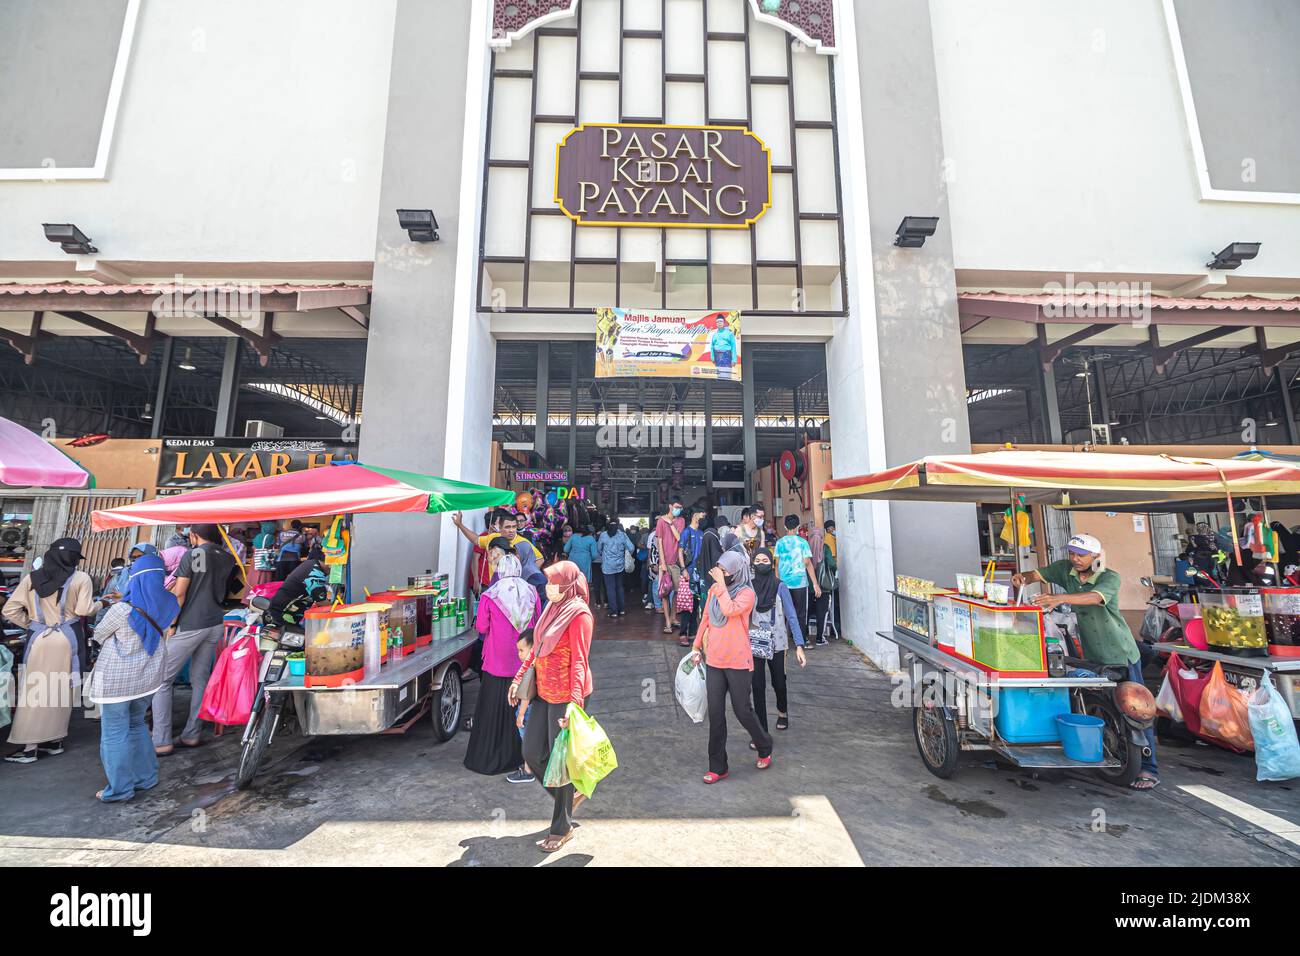 Menschen und Händler am Eingang des Pasar Kedai Payang Marktes in Kuala Terengganu, Malaysia. Stockfoto